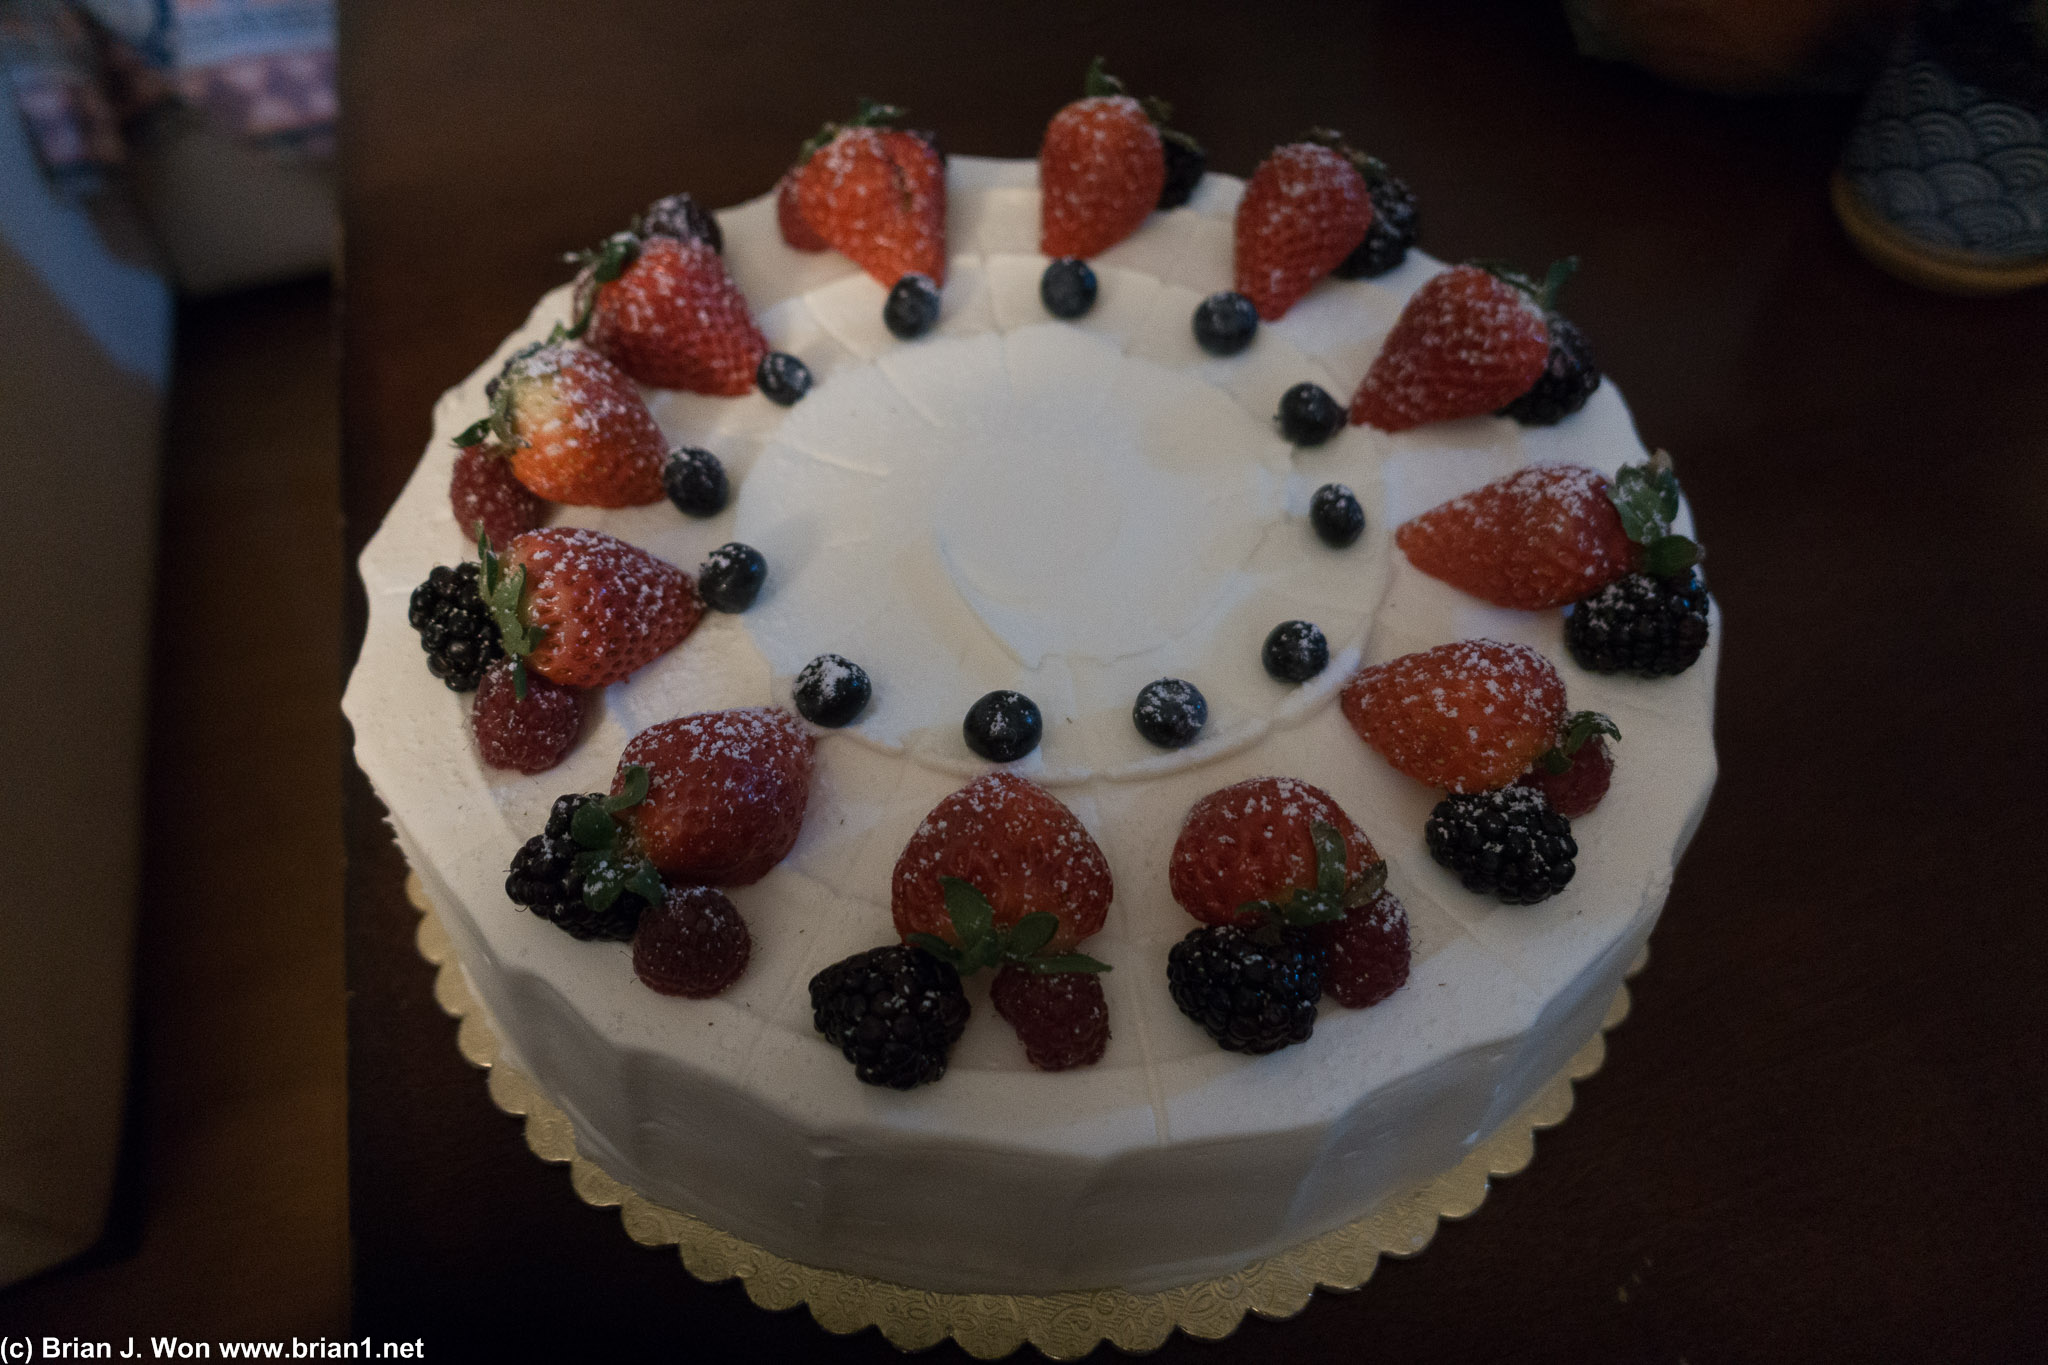 Strawberry shortcake from Amandine Patisserie.